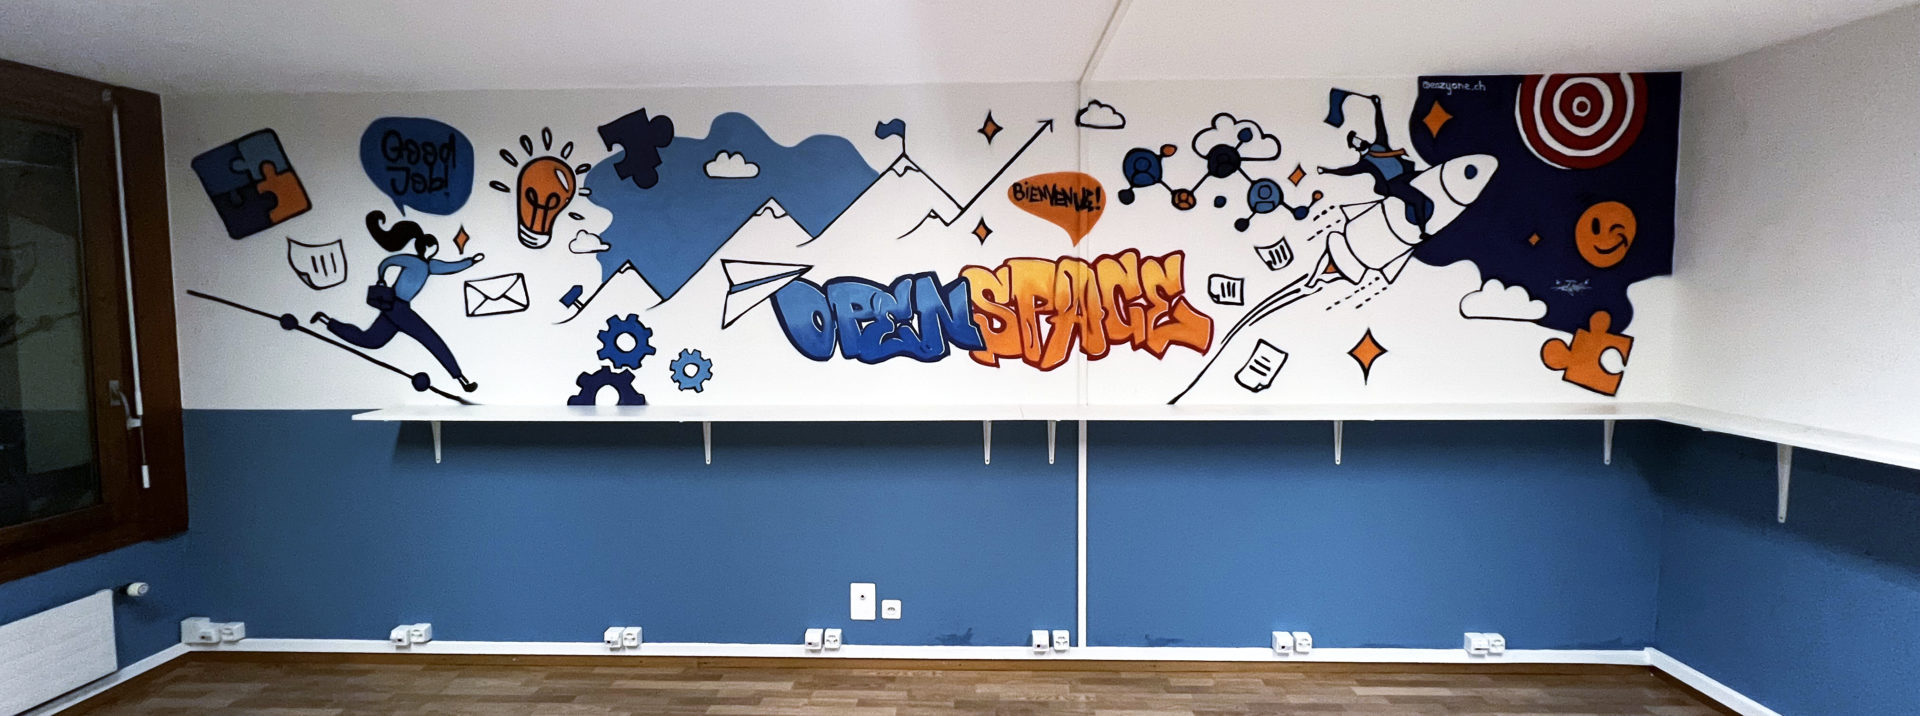 Fresque graffiti openspace bureau newjob genève